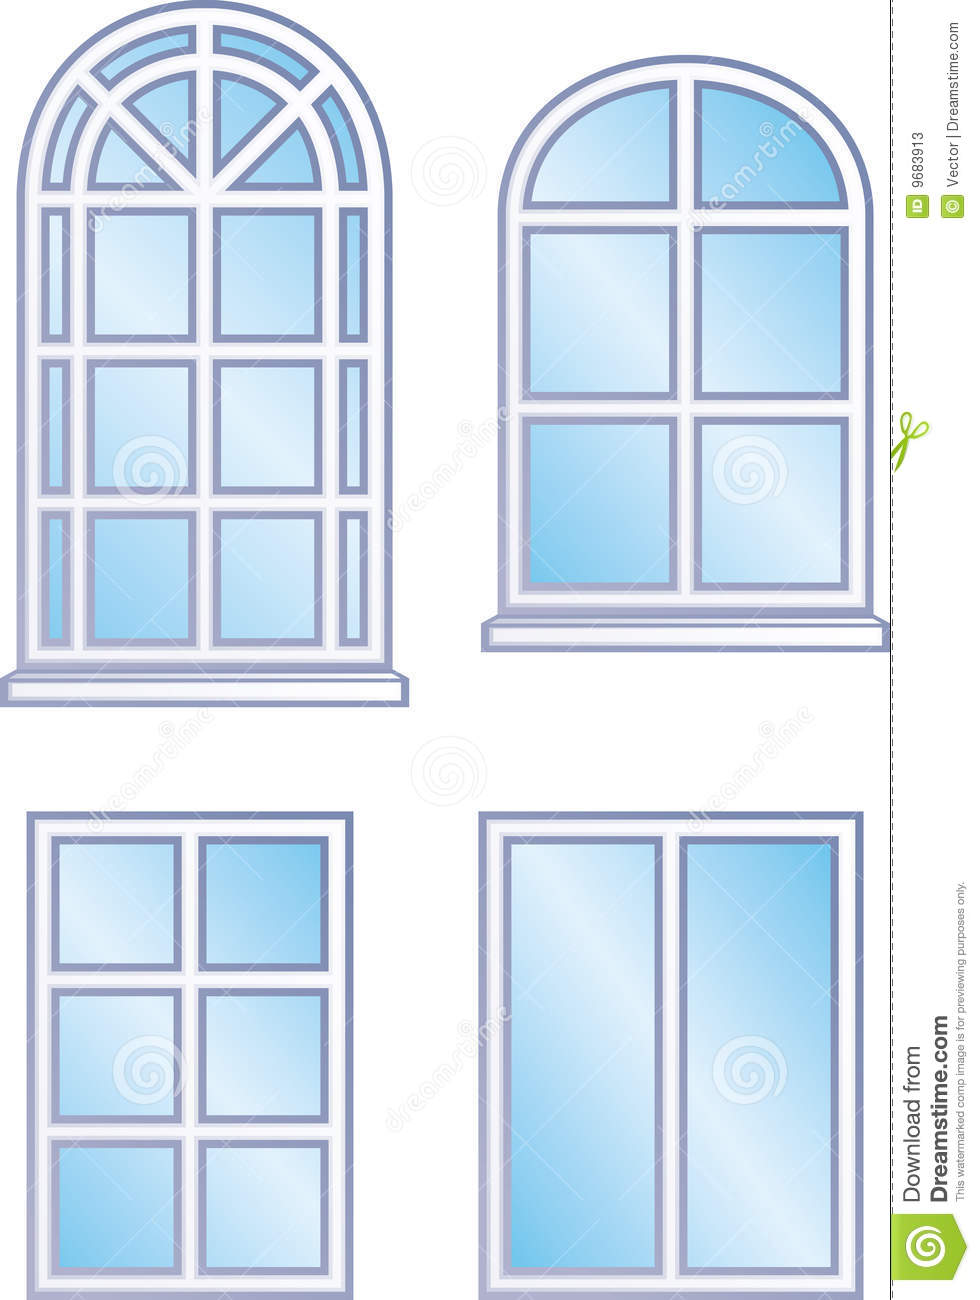 Vector Illustration Isolated On White Background   Window Frames